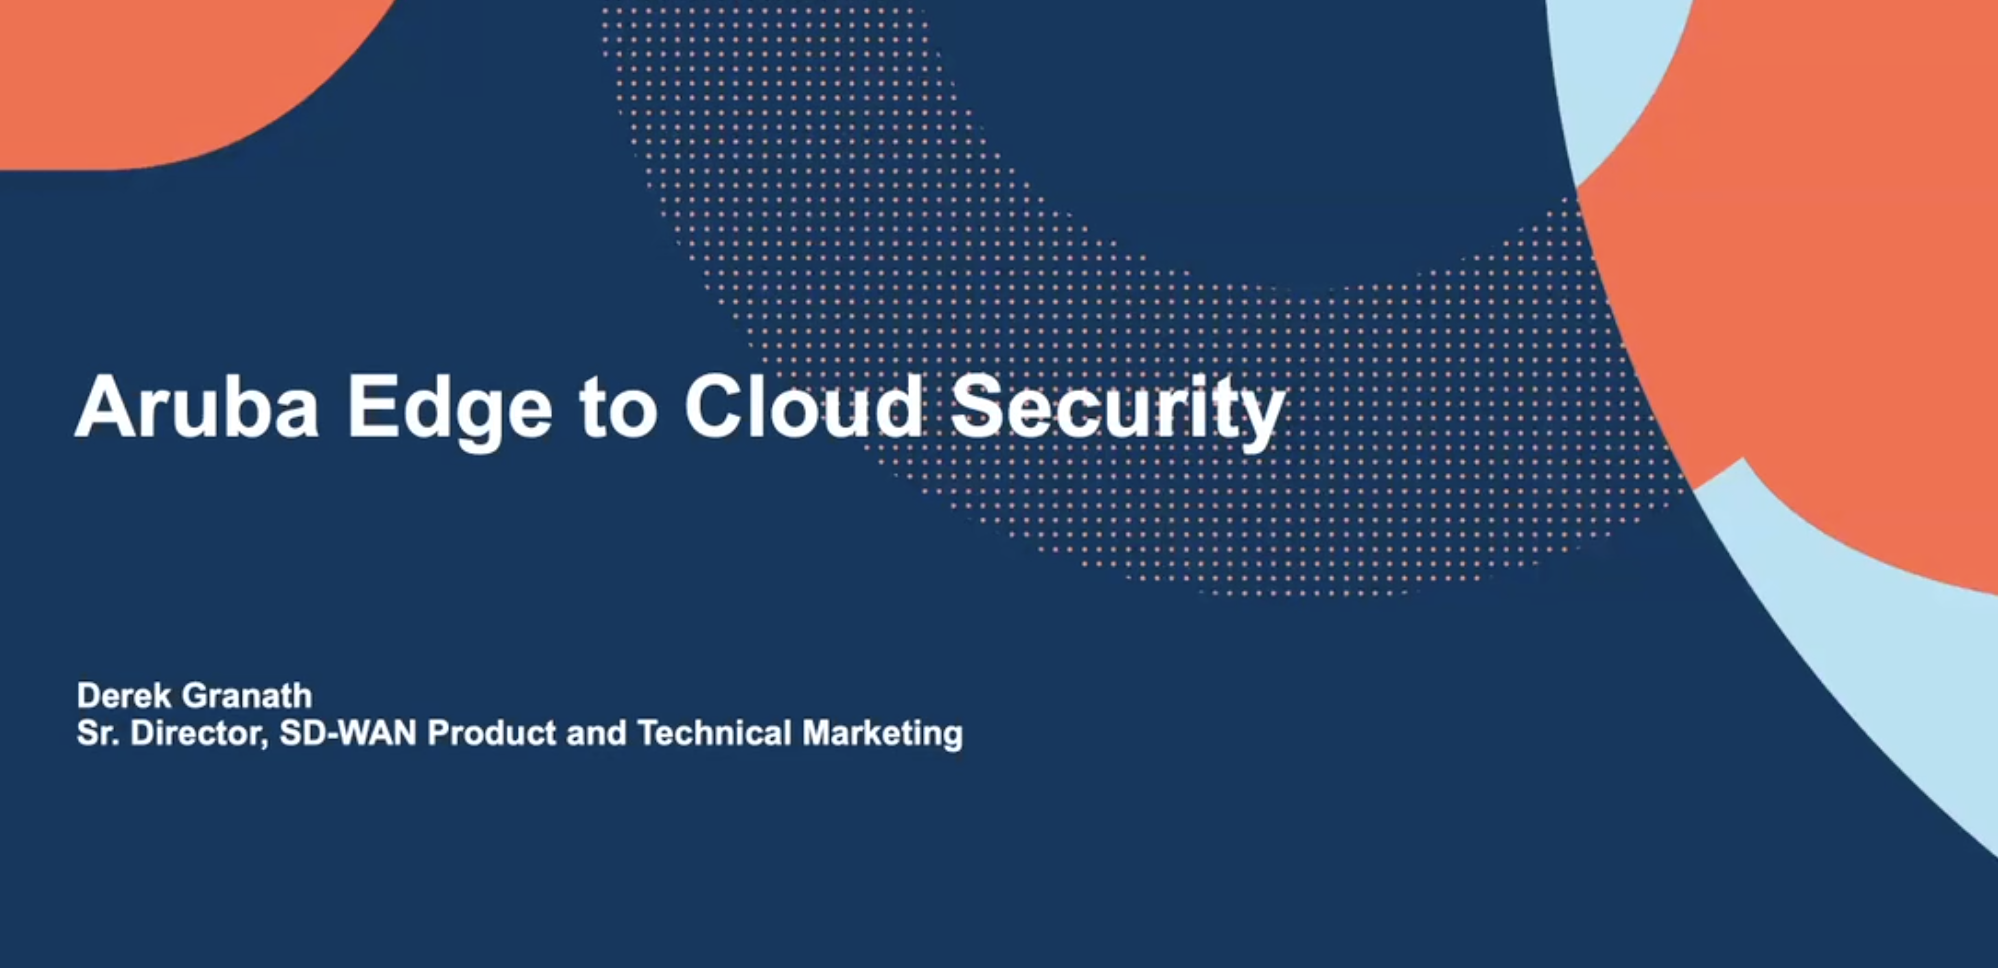 Aruba Edge to Cloud Security: On Demand